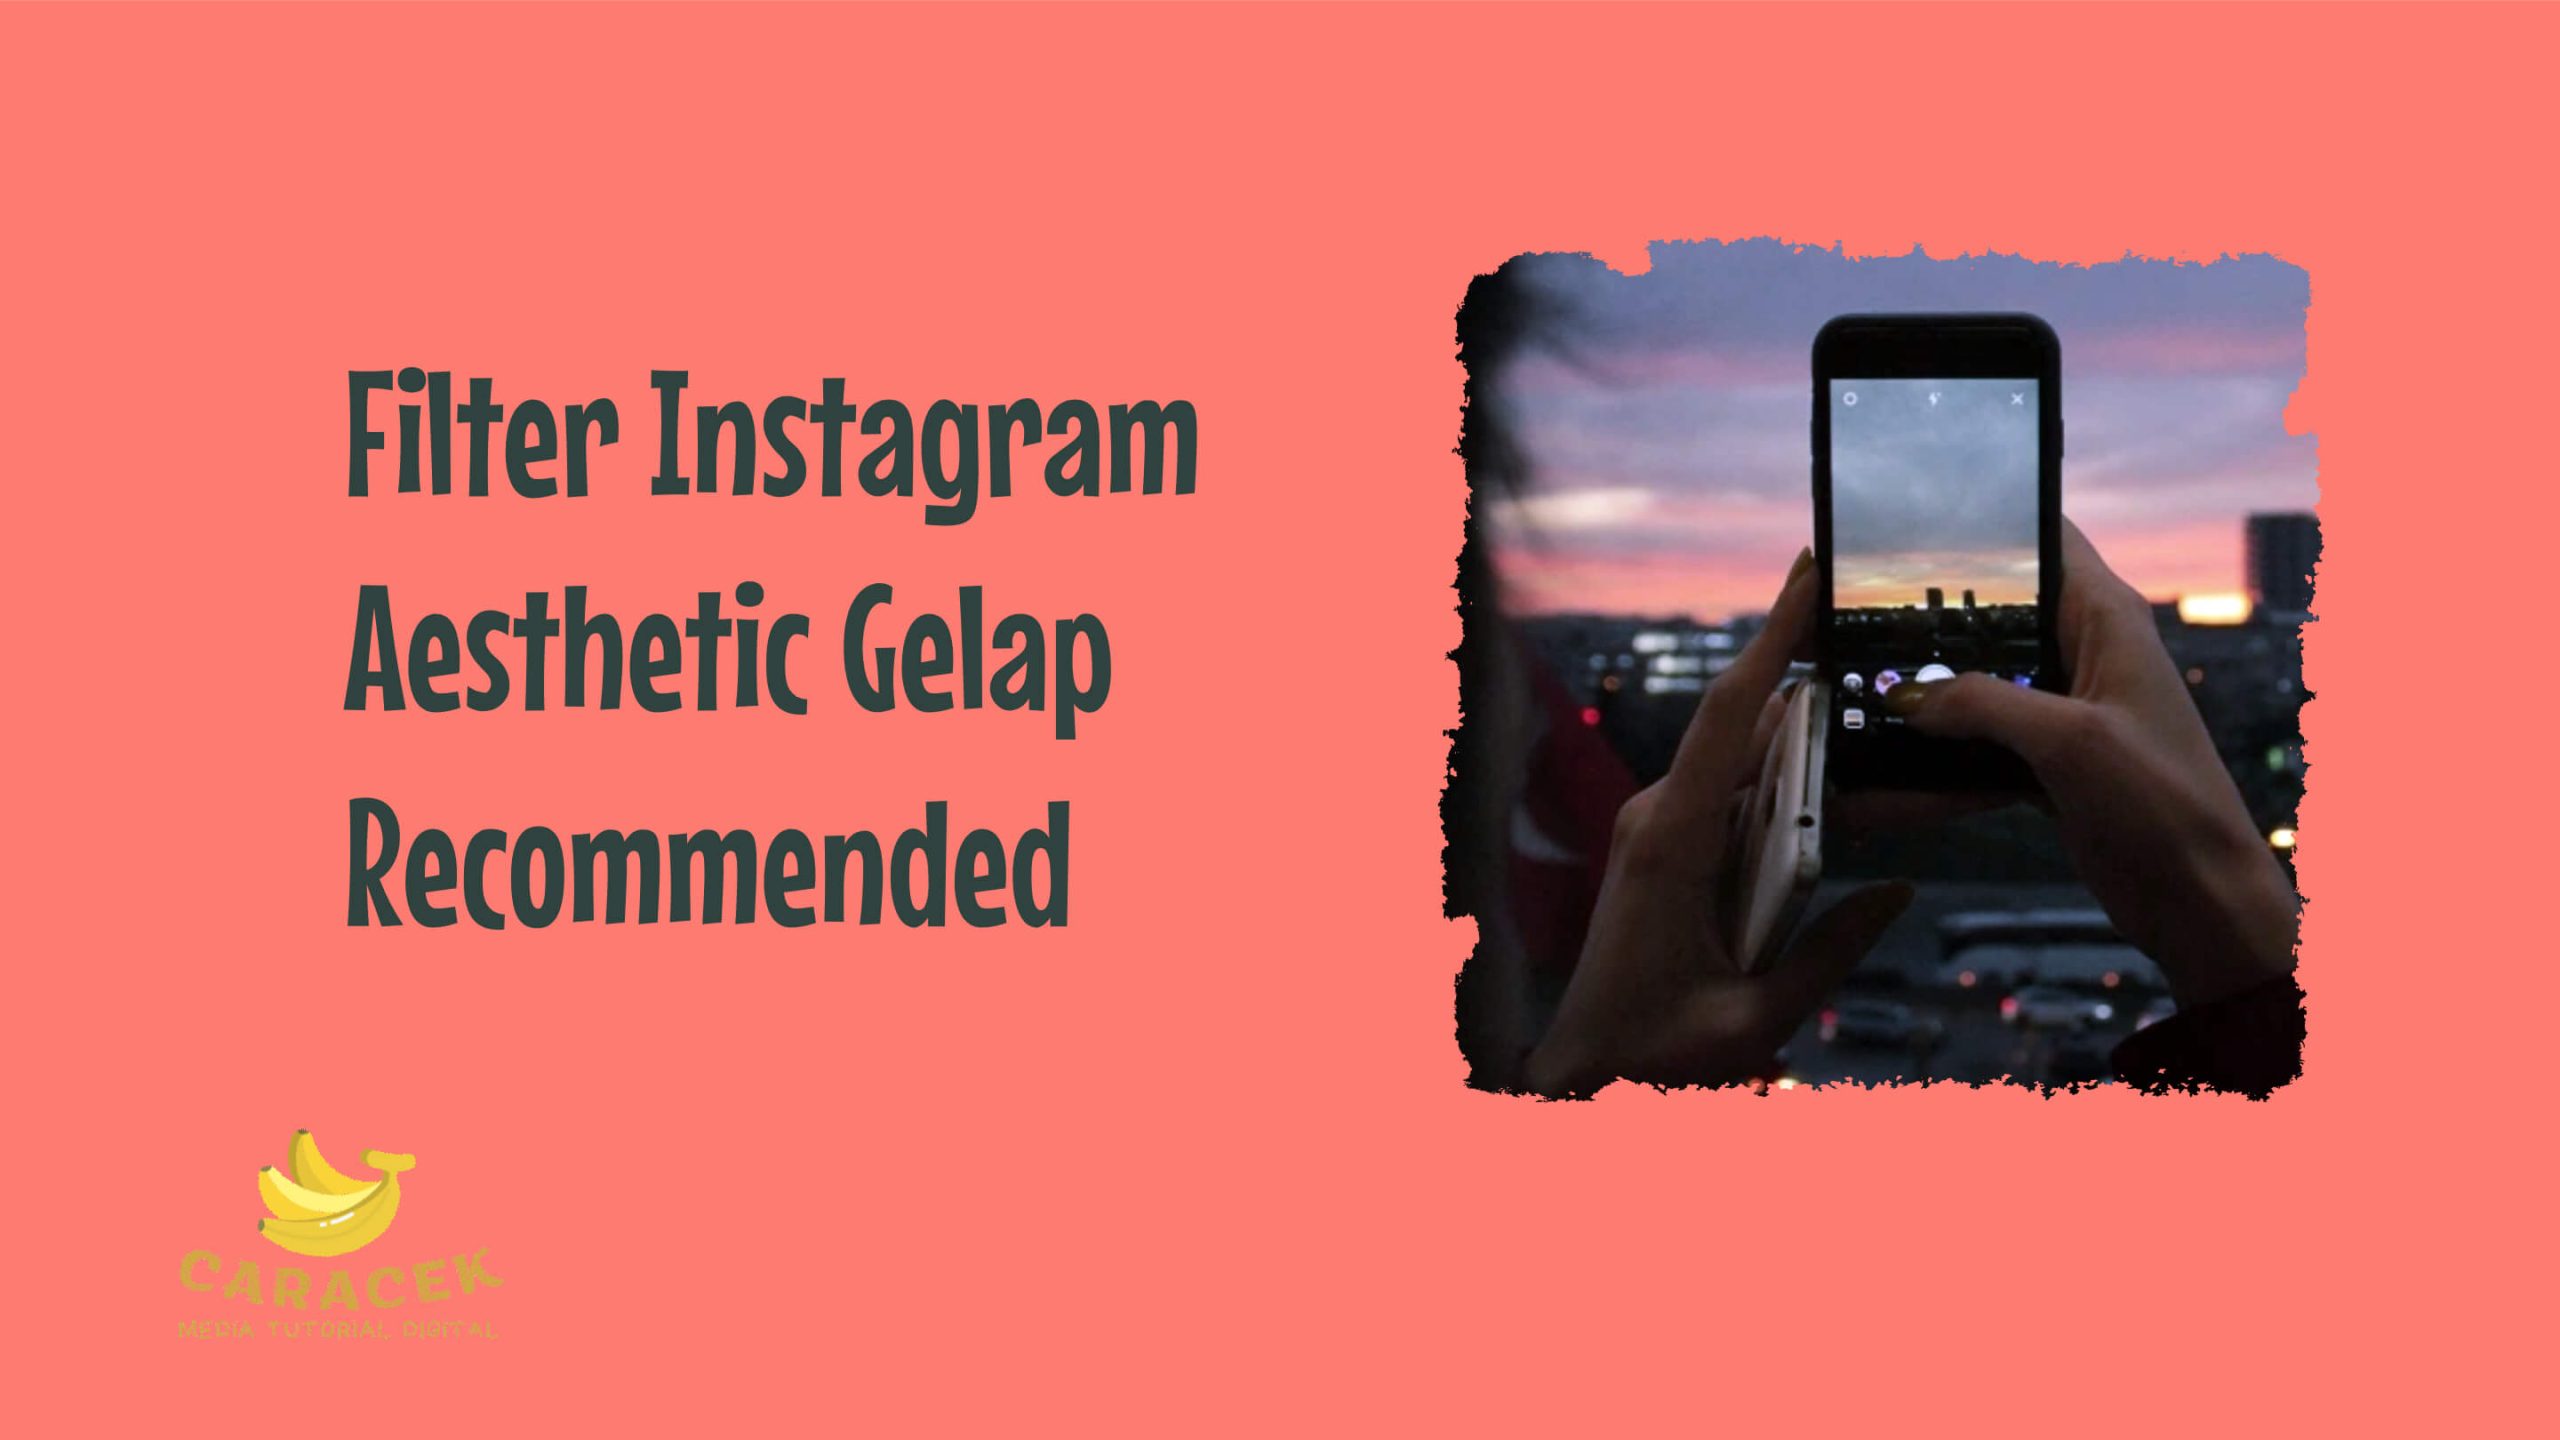 Filter Instagram Aesthetic Gelap